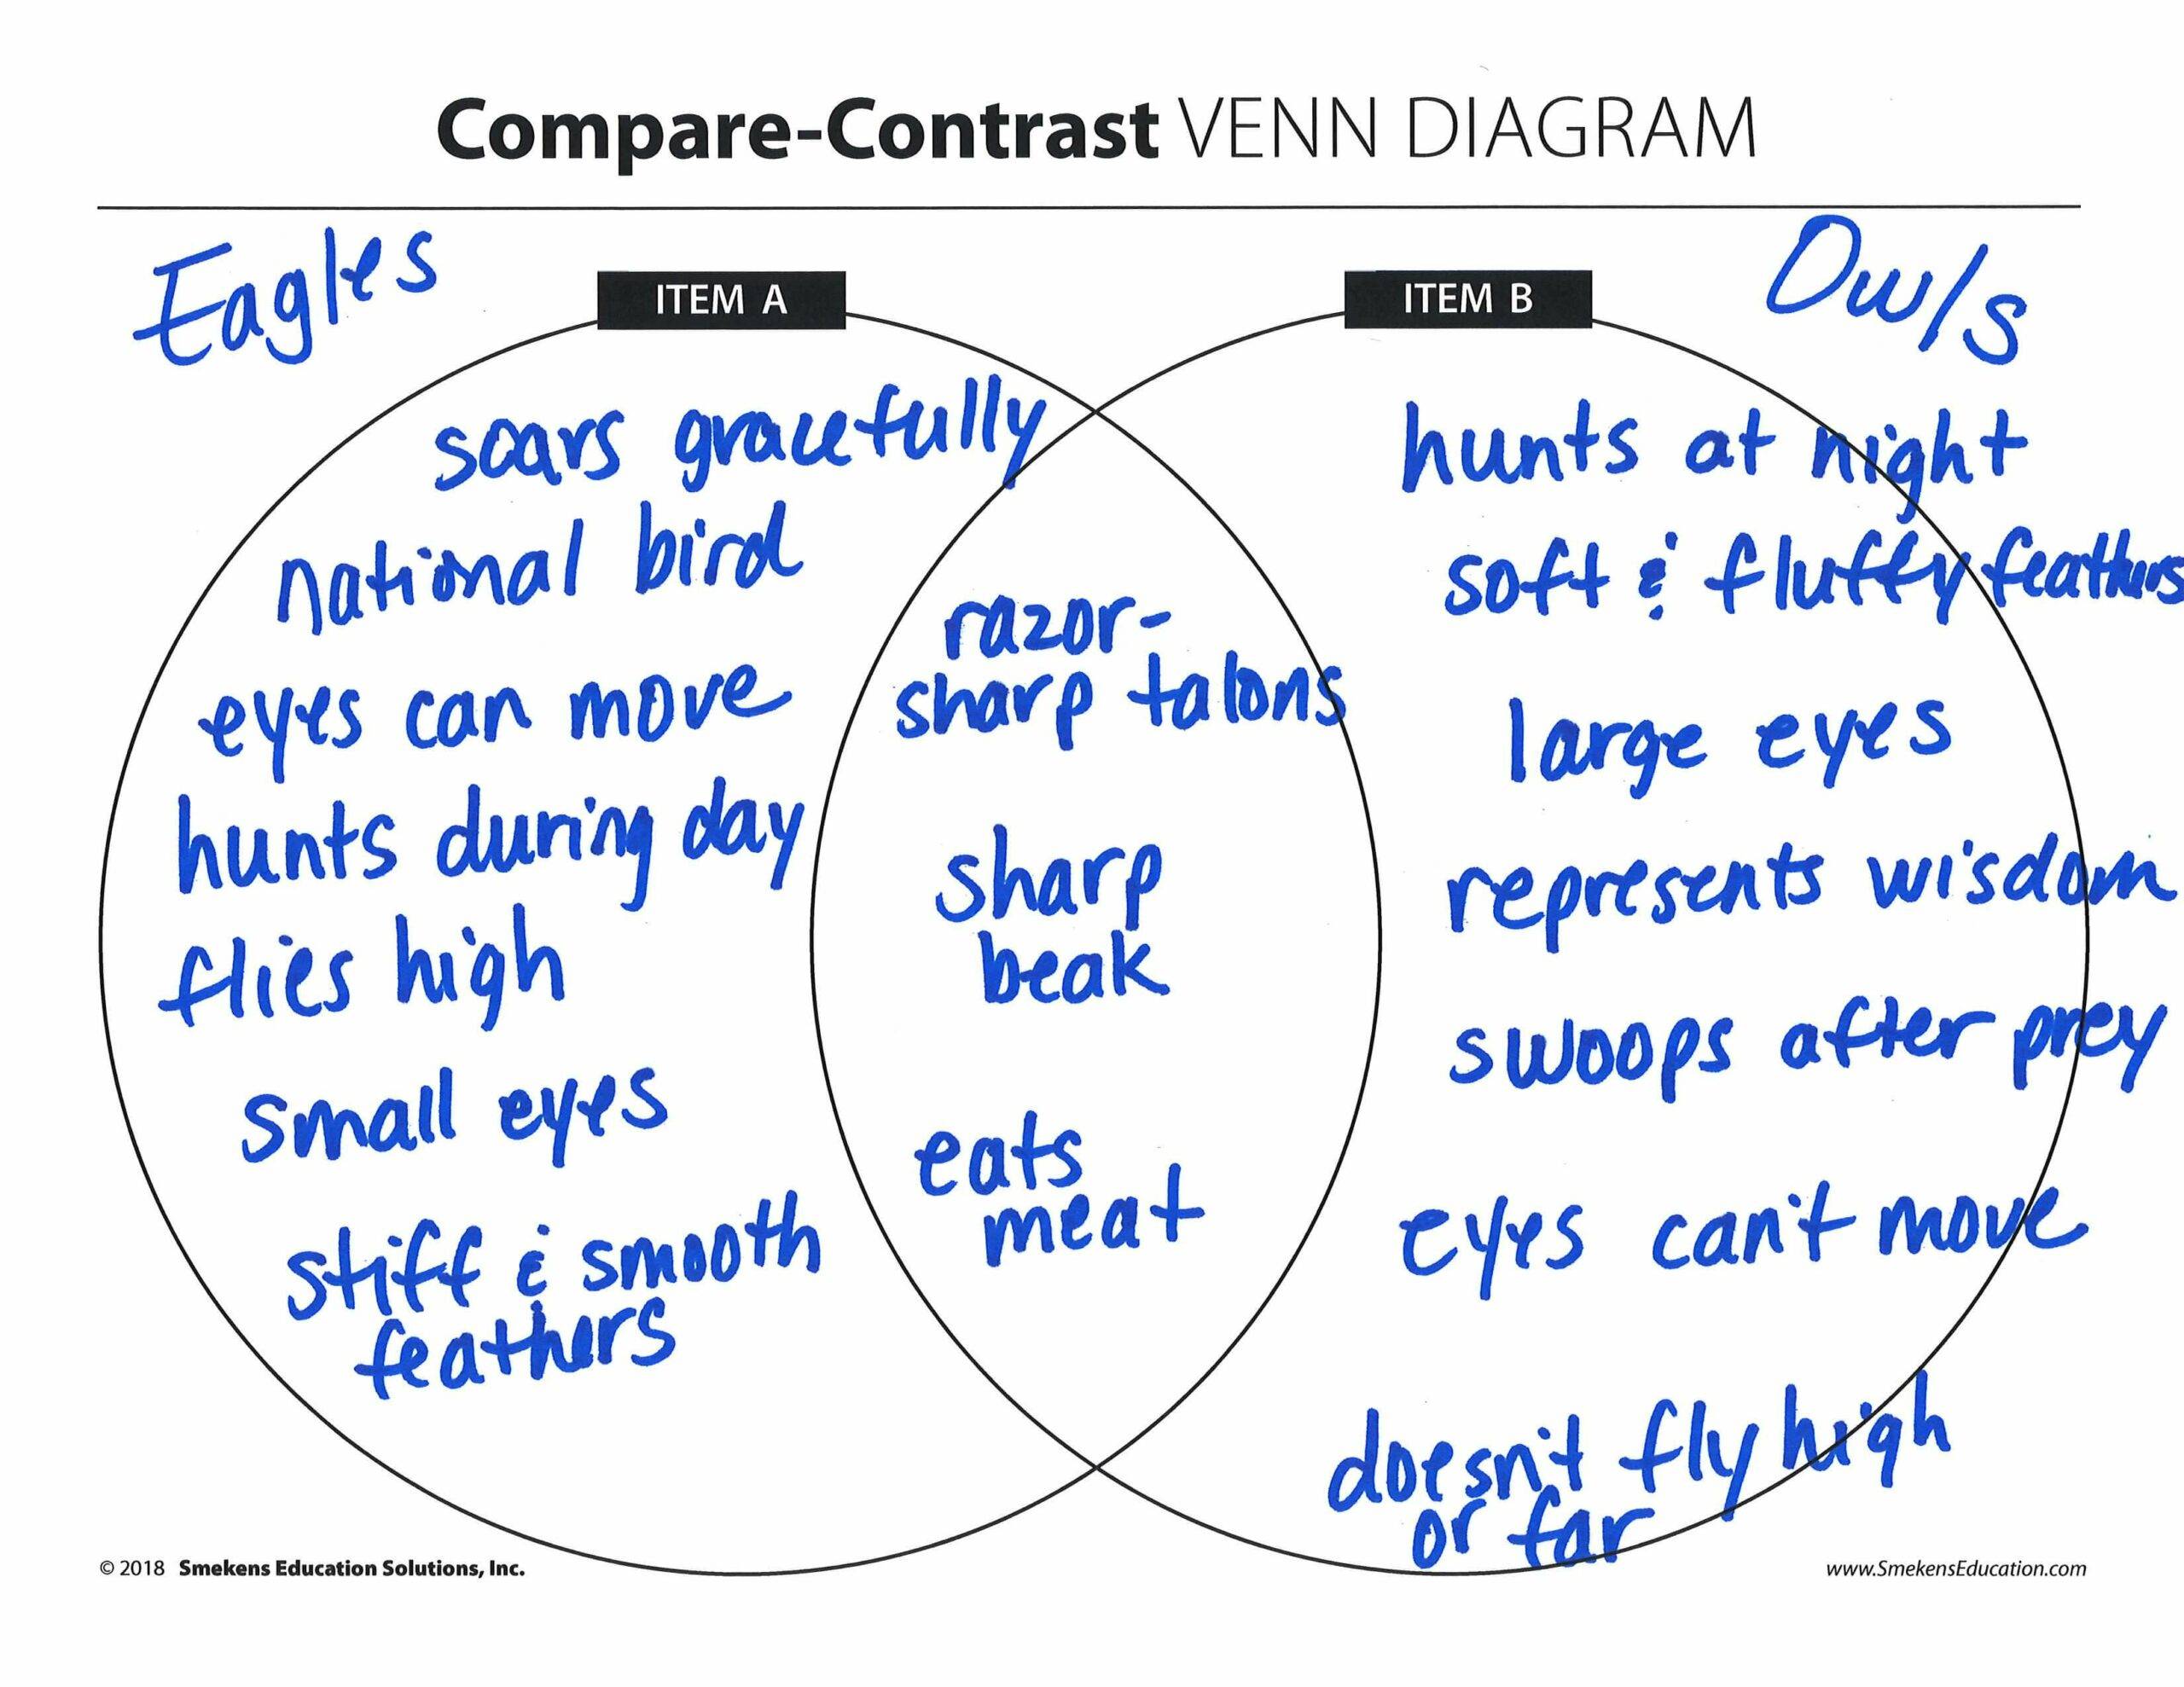 Eagles vs Owls Venn Diagram - Example